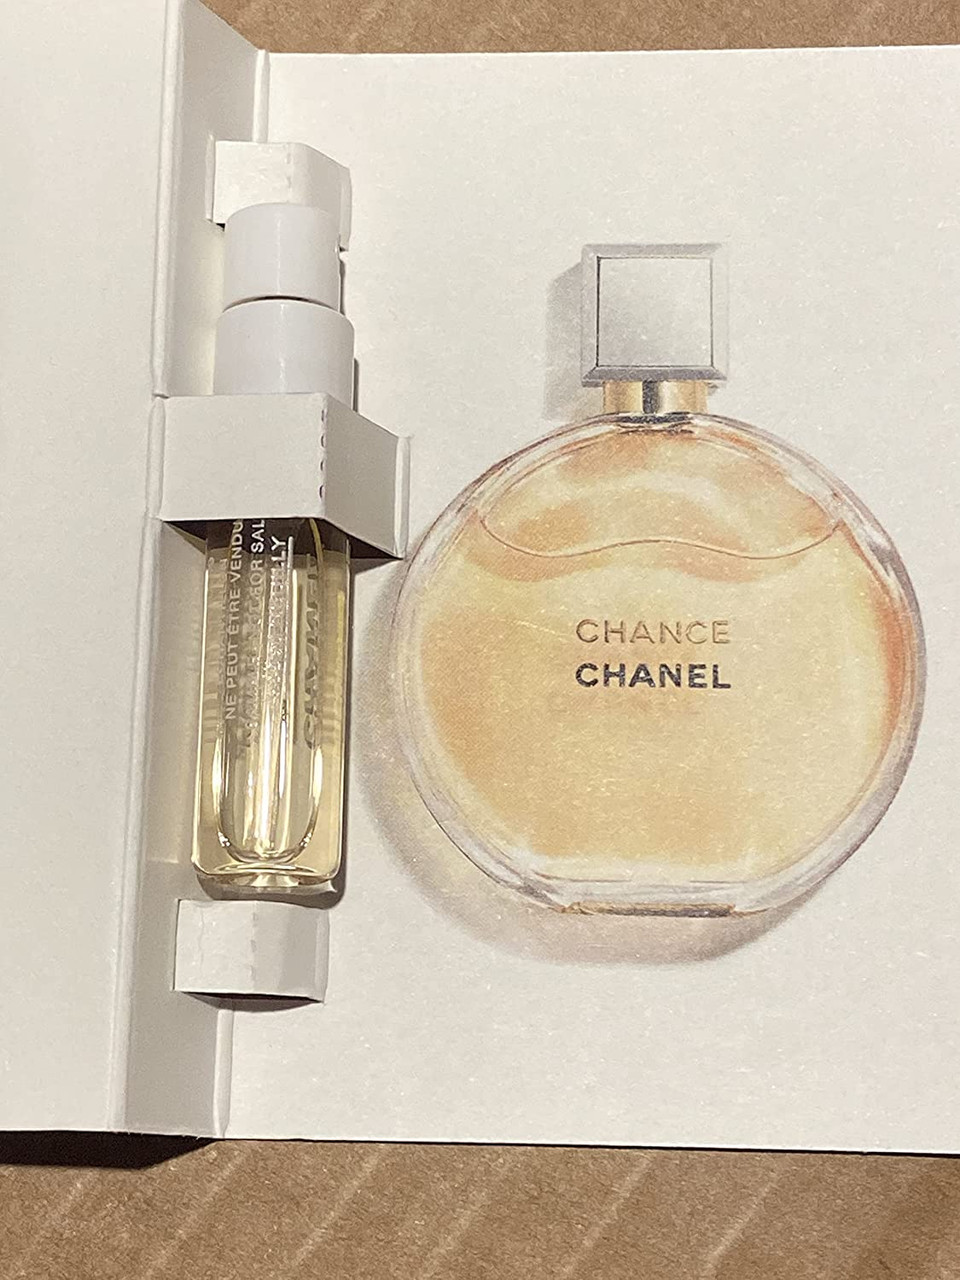 2 X Chanel Chance Eau Tendre EDP Spray Perfume Samples 0.05oz